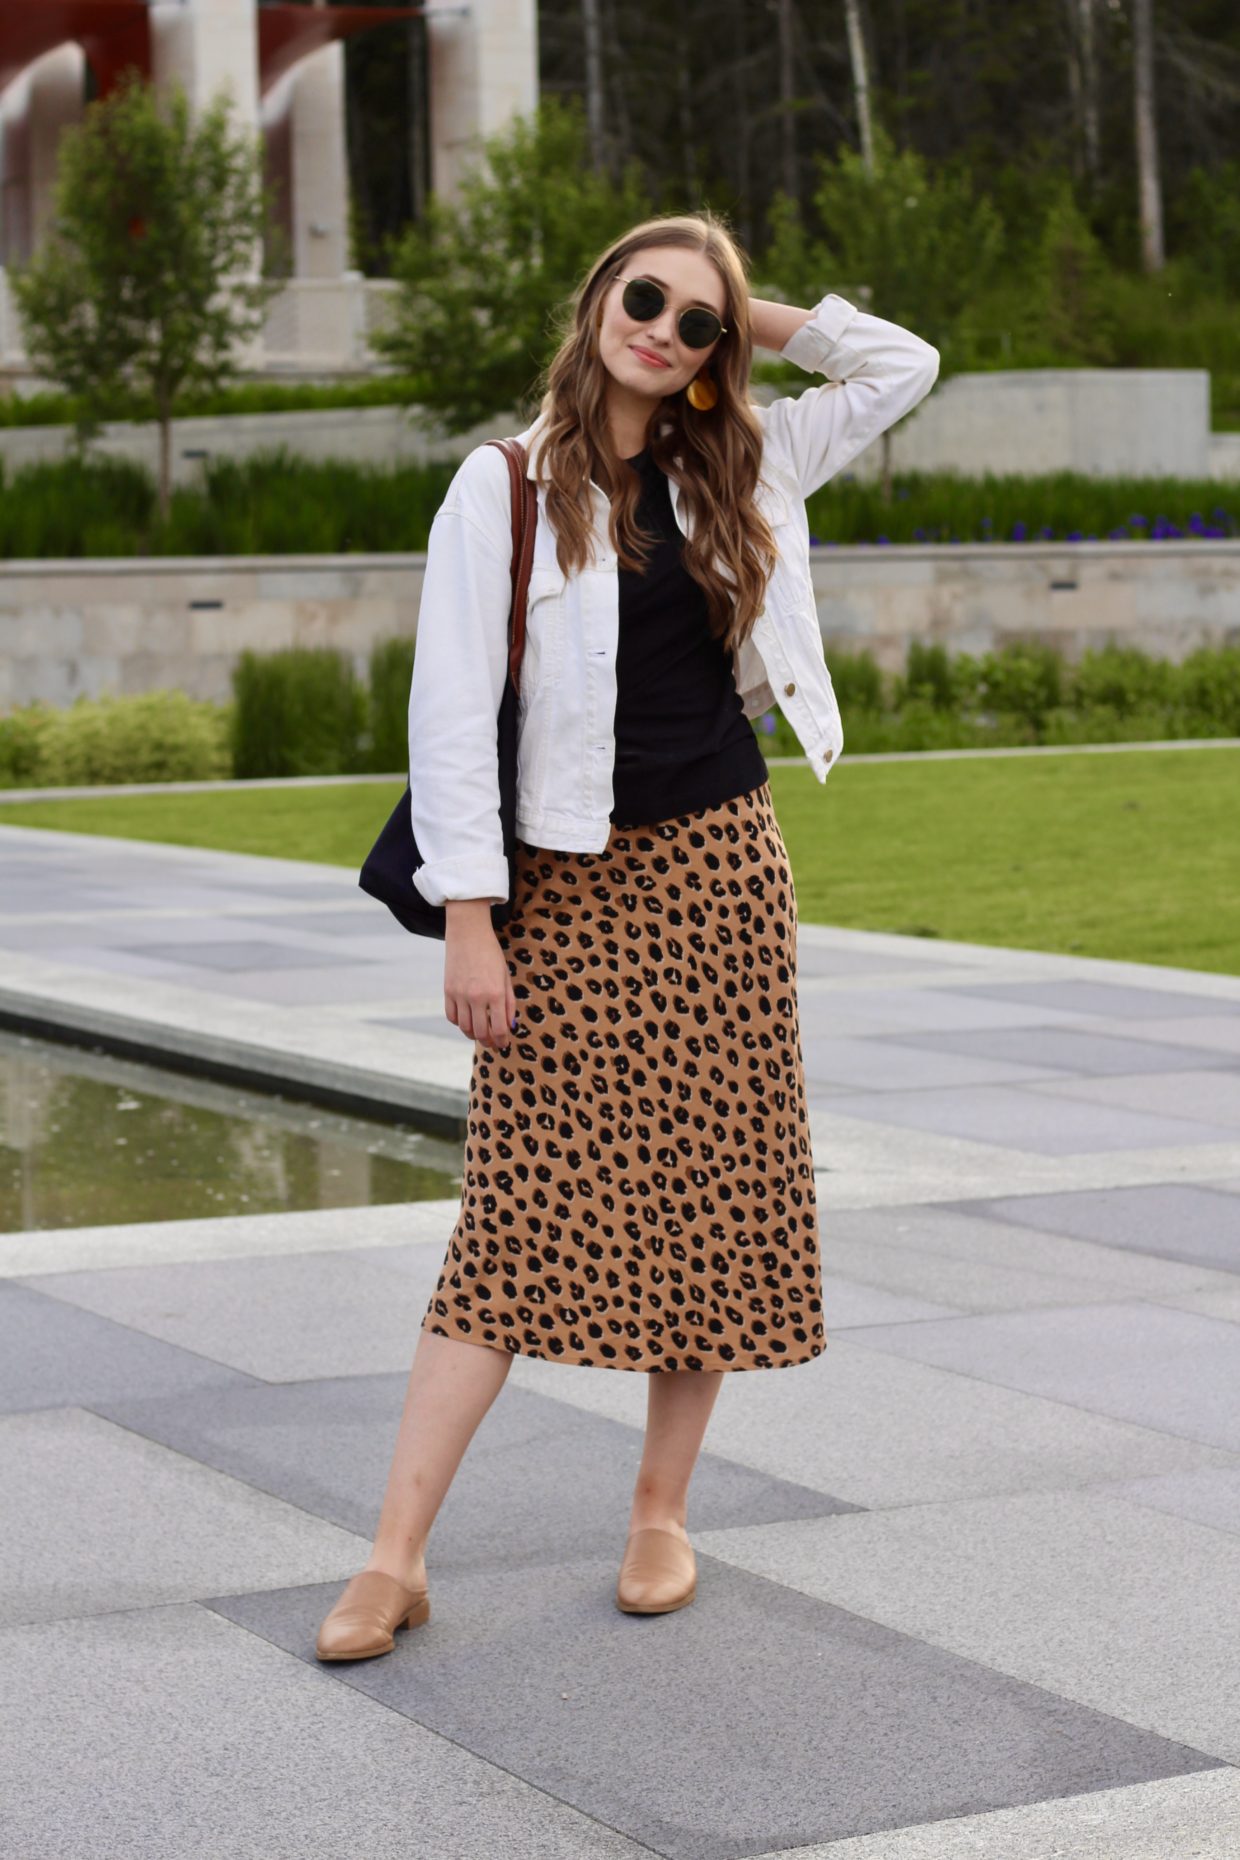 Leopard midi skirt outfit inspo white denim jacket